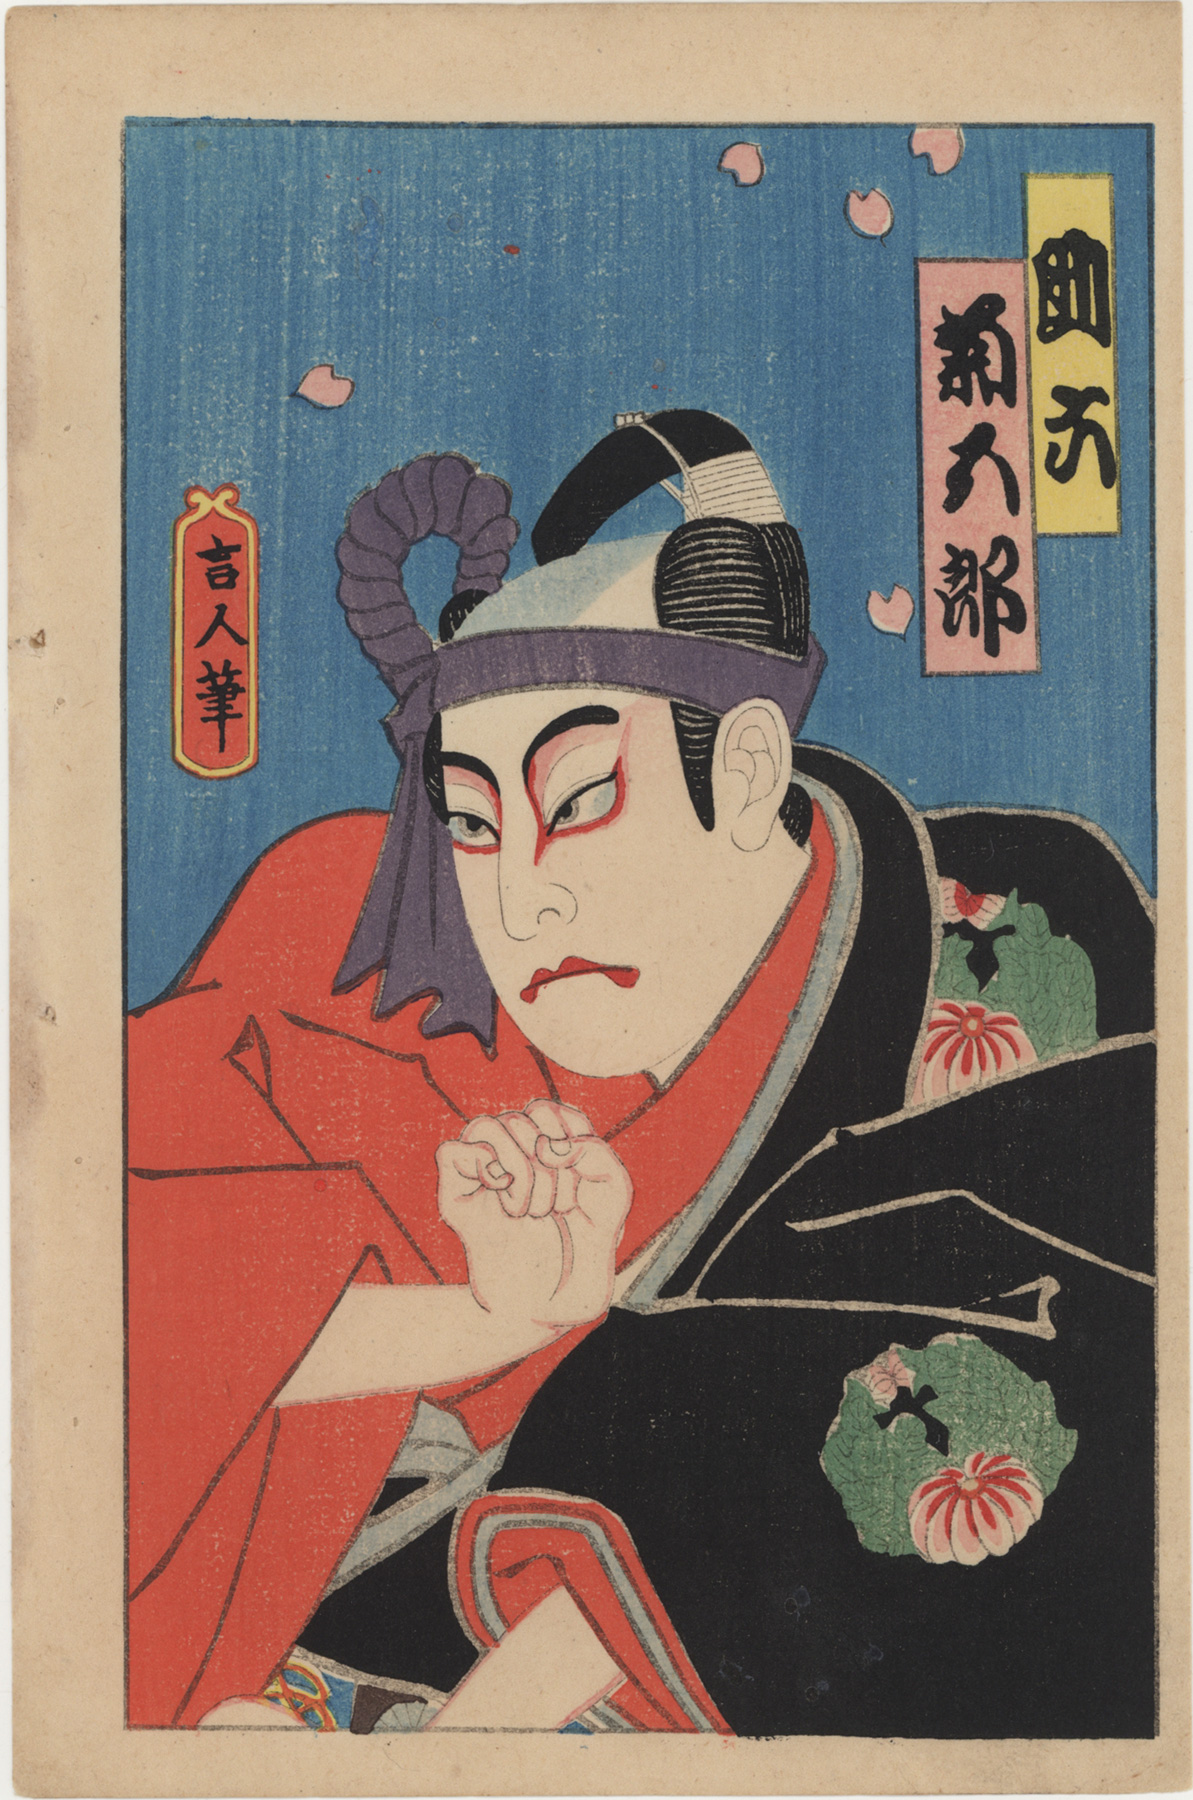 Kikugorō in the role of Sukeroku